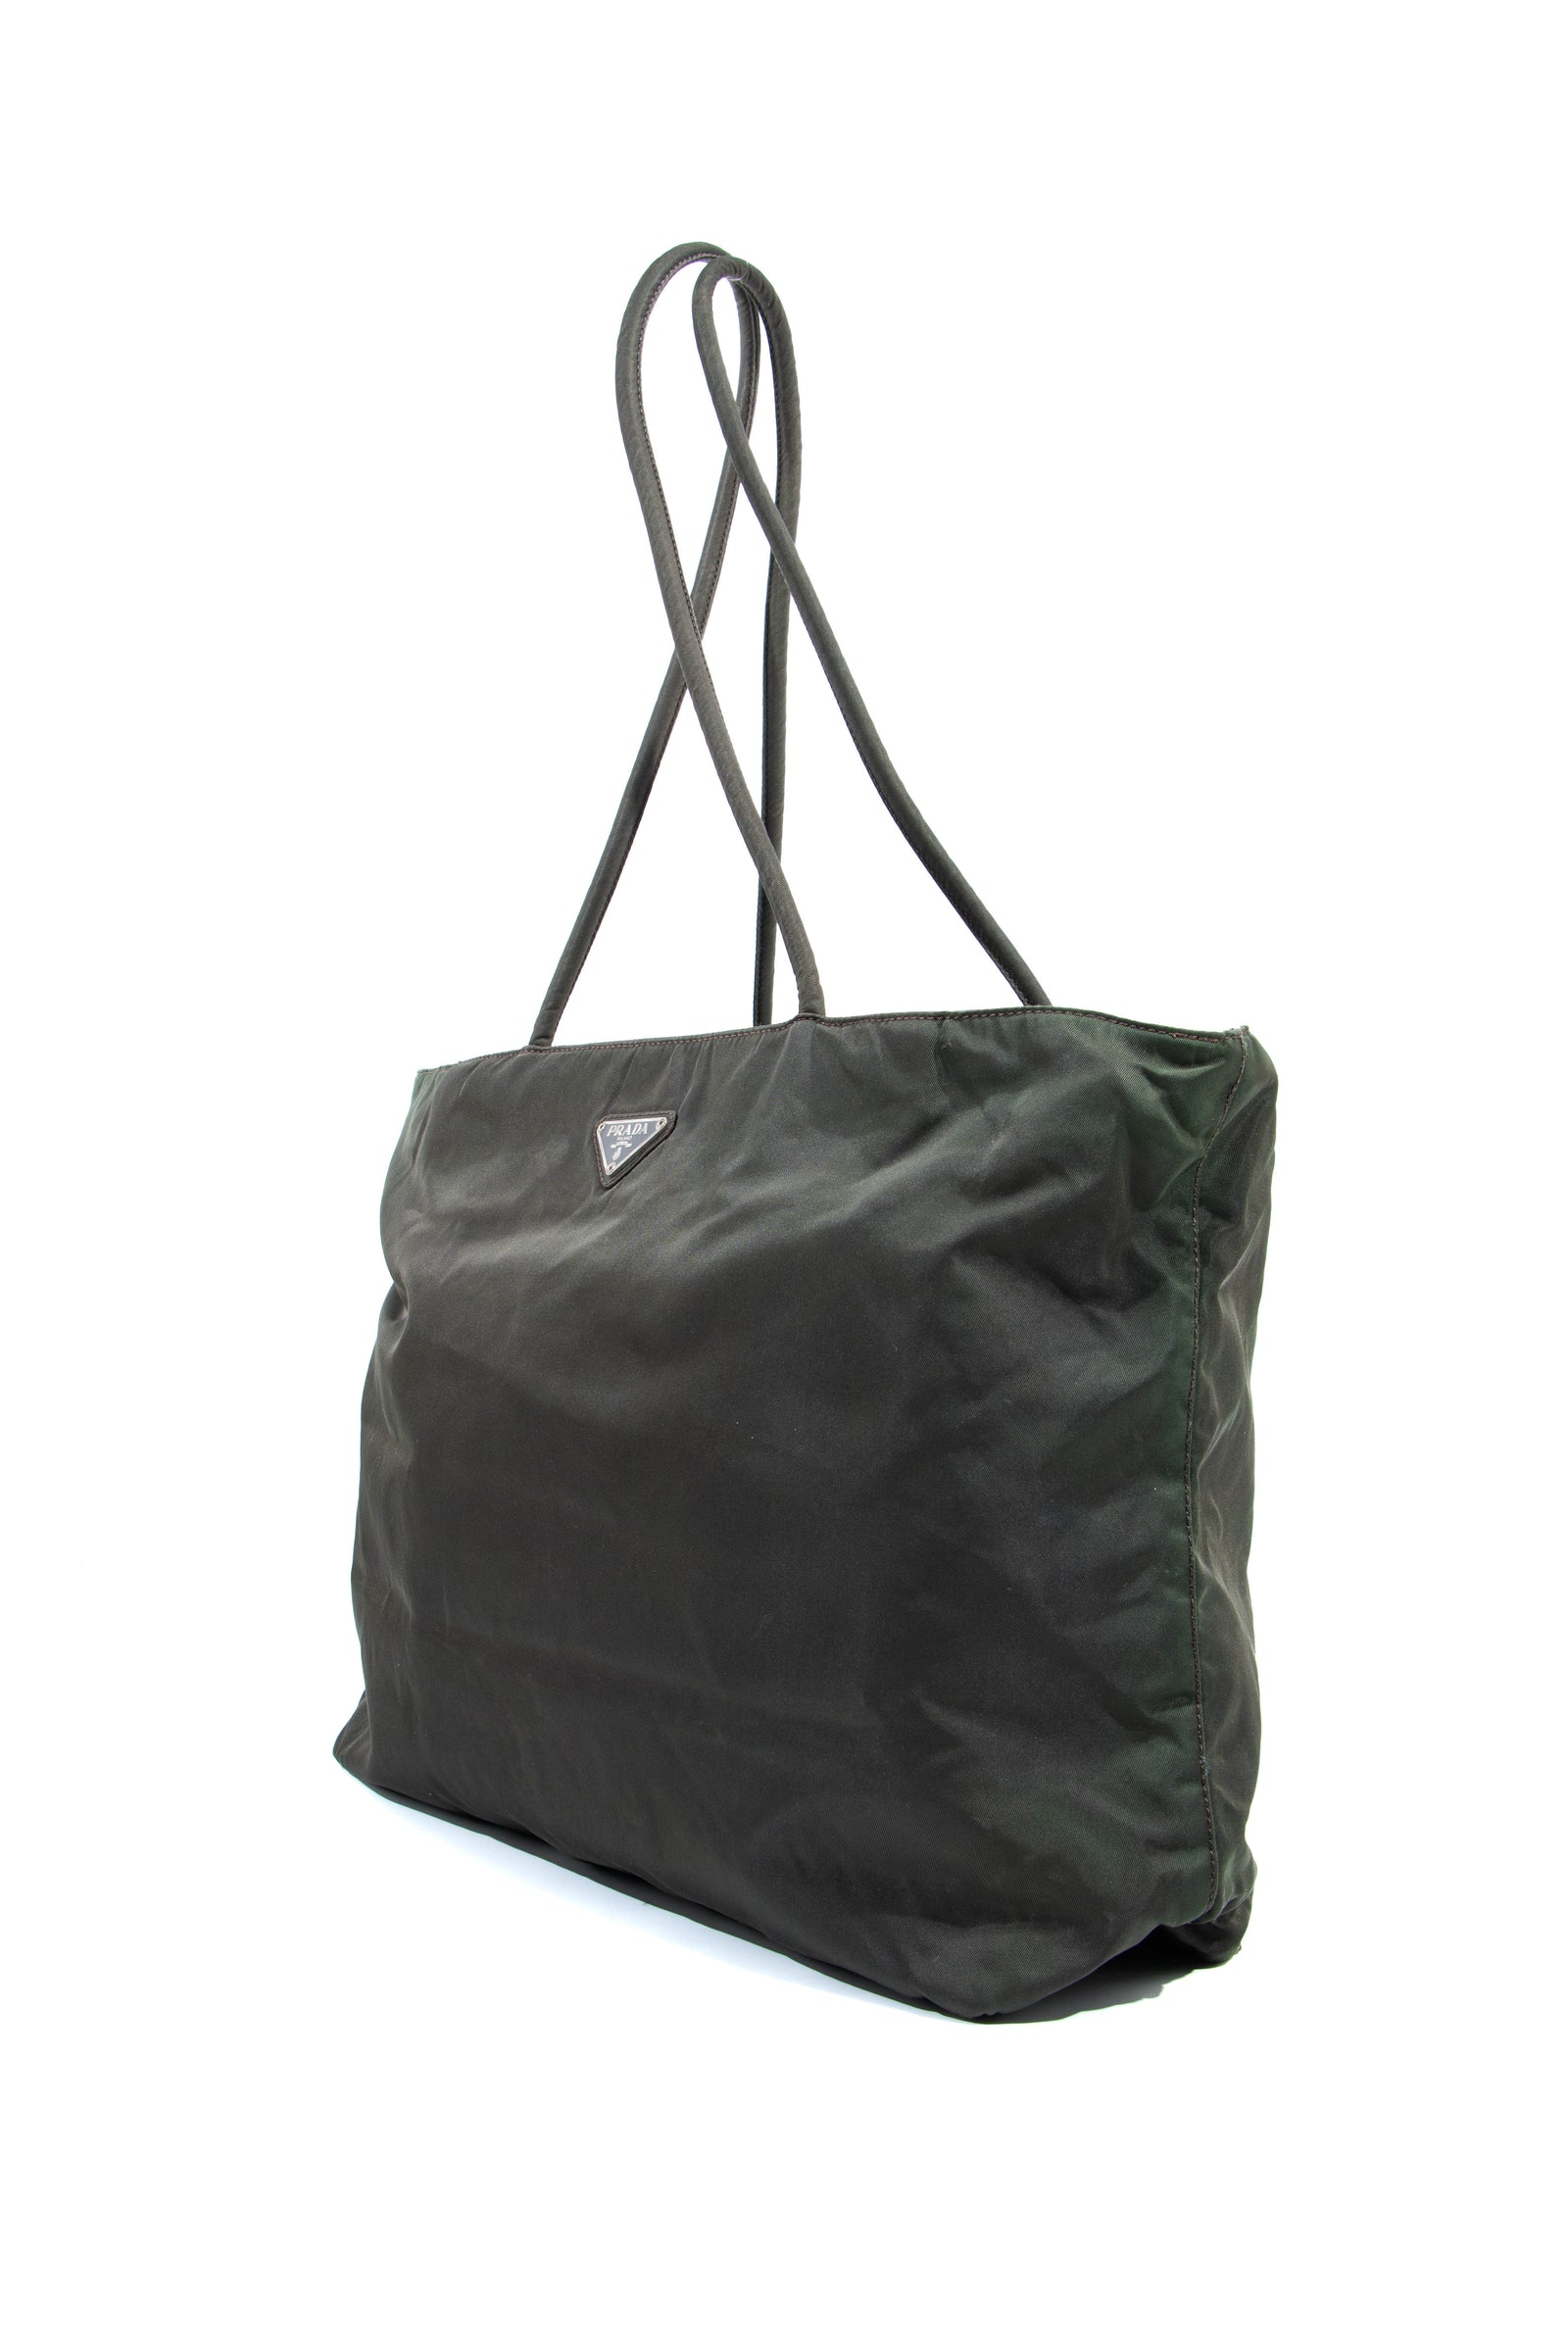 SOLD Authentic PRADA Green Nylon Tote Hand Bag Purse (Army Green)